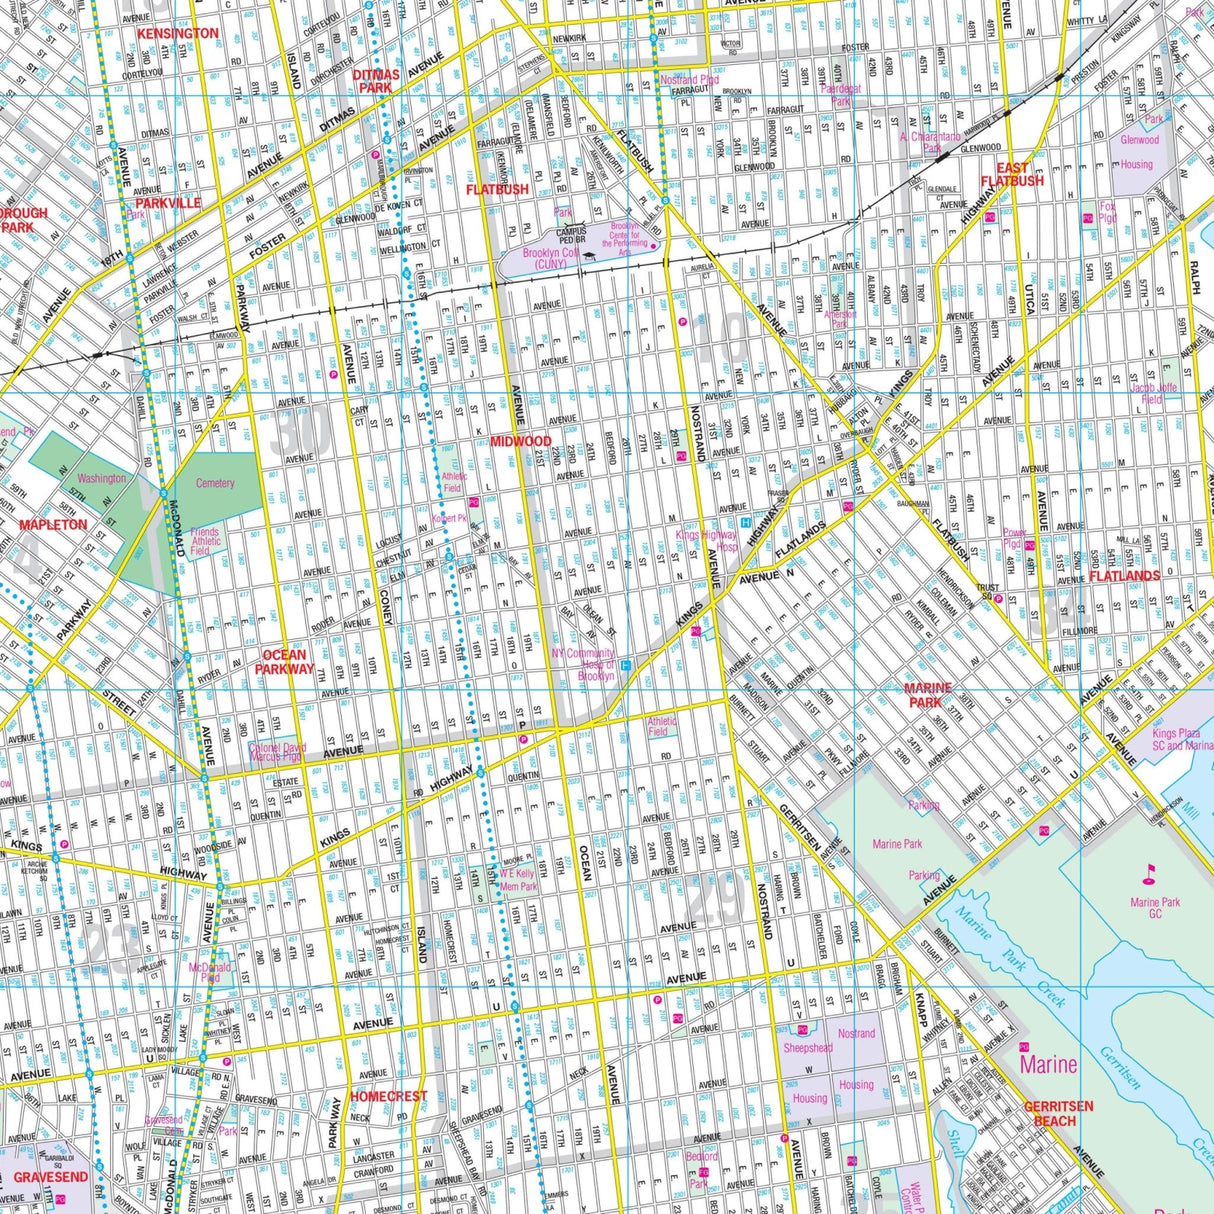 Brooklyn, NY Wall Map - KA-C-NY-BROOKLYN-PAPER - Ultimate Globes